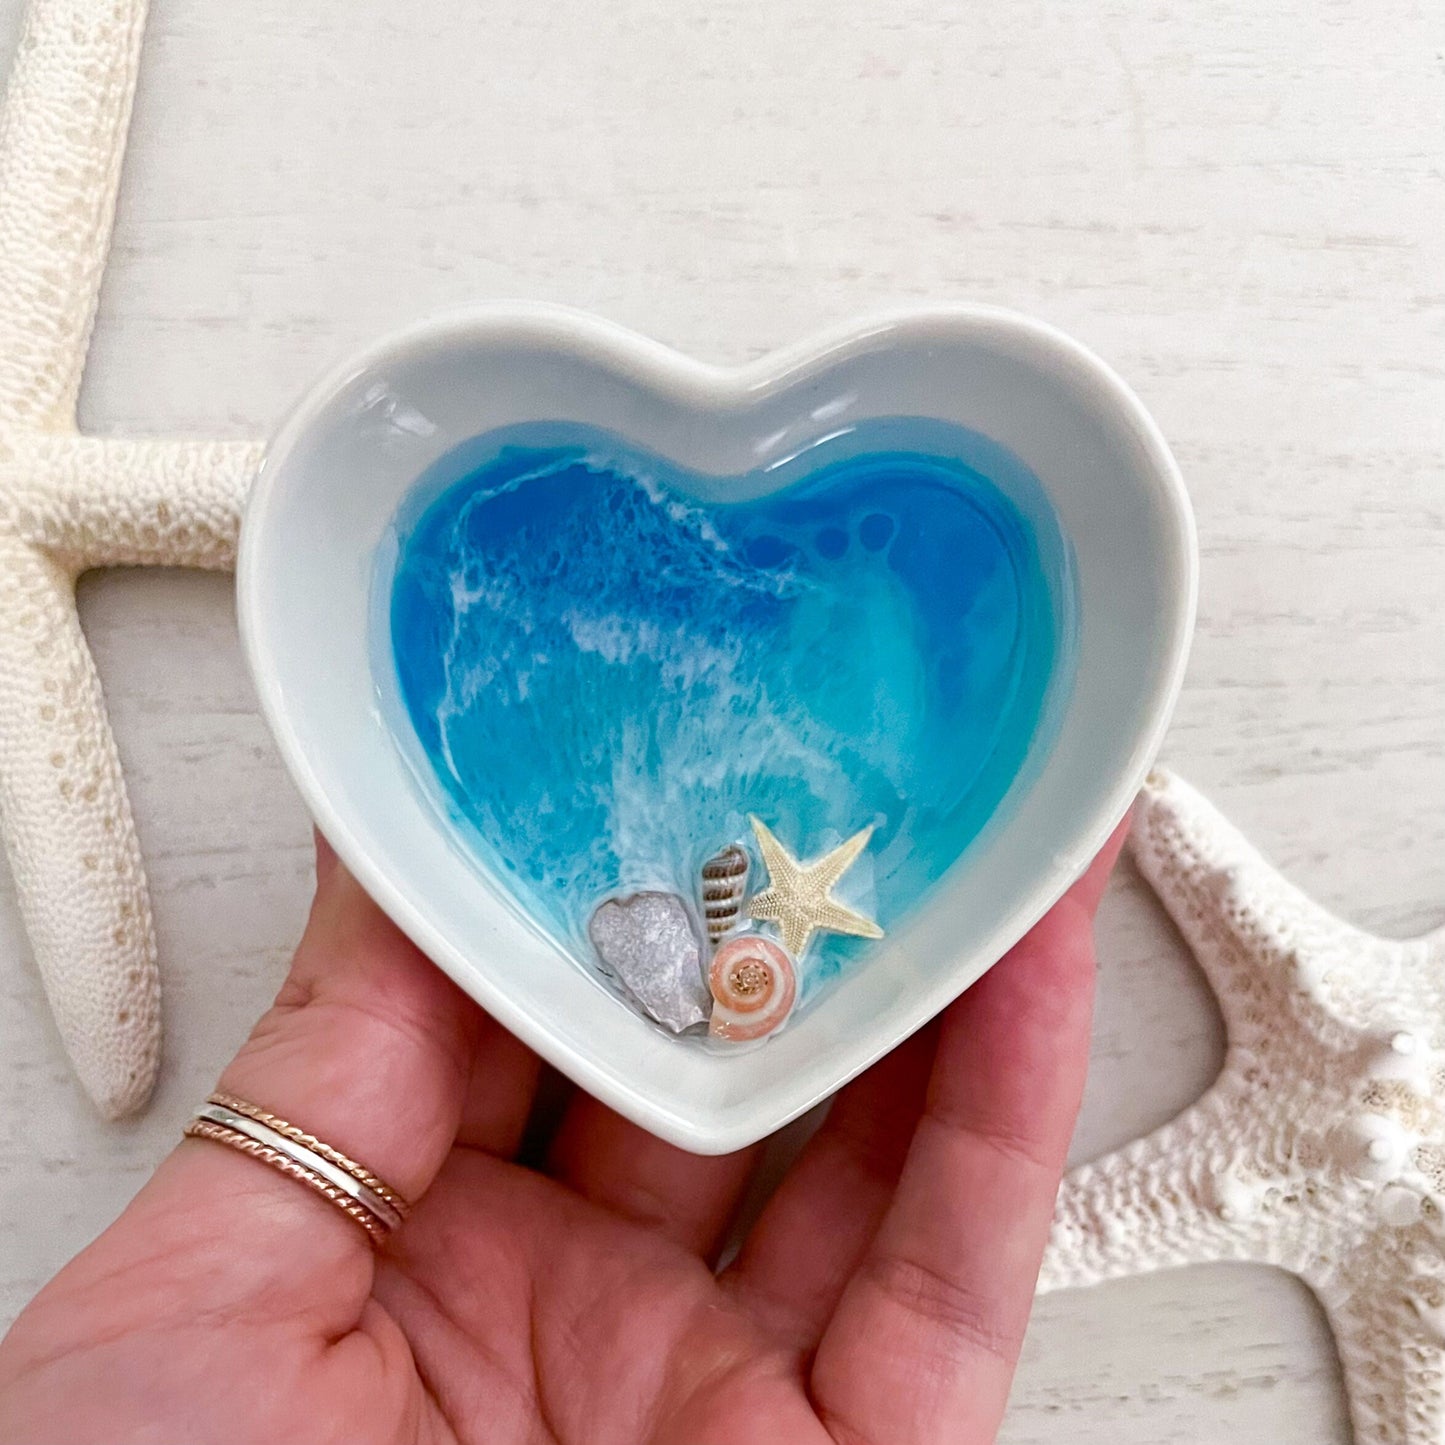 Resin Beach Heart Dish with Starfish and Shell Accent - Handmade Ocean Resin Art